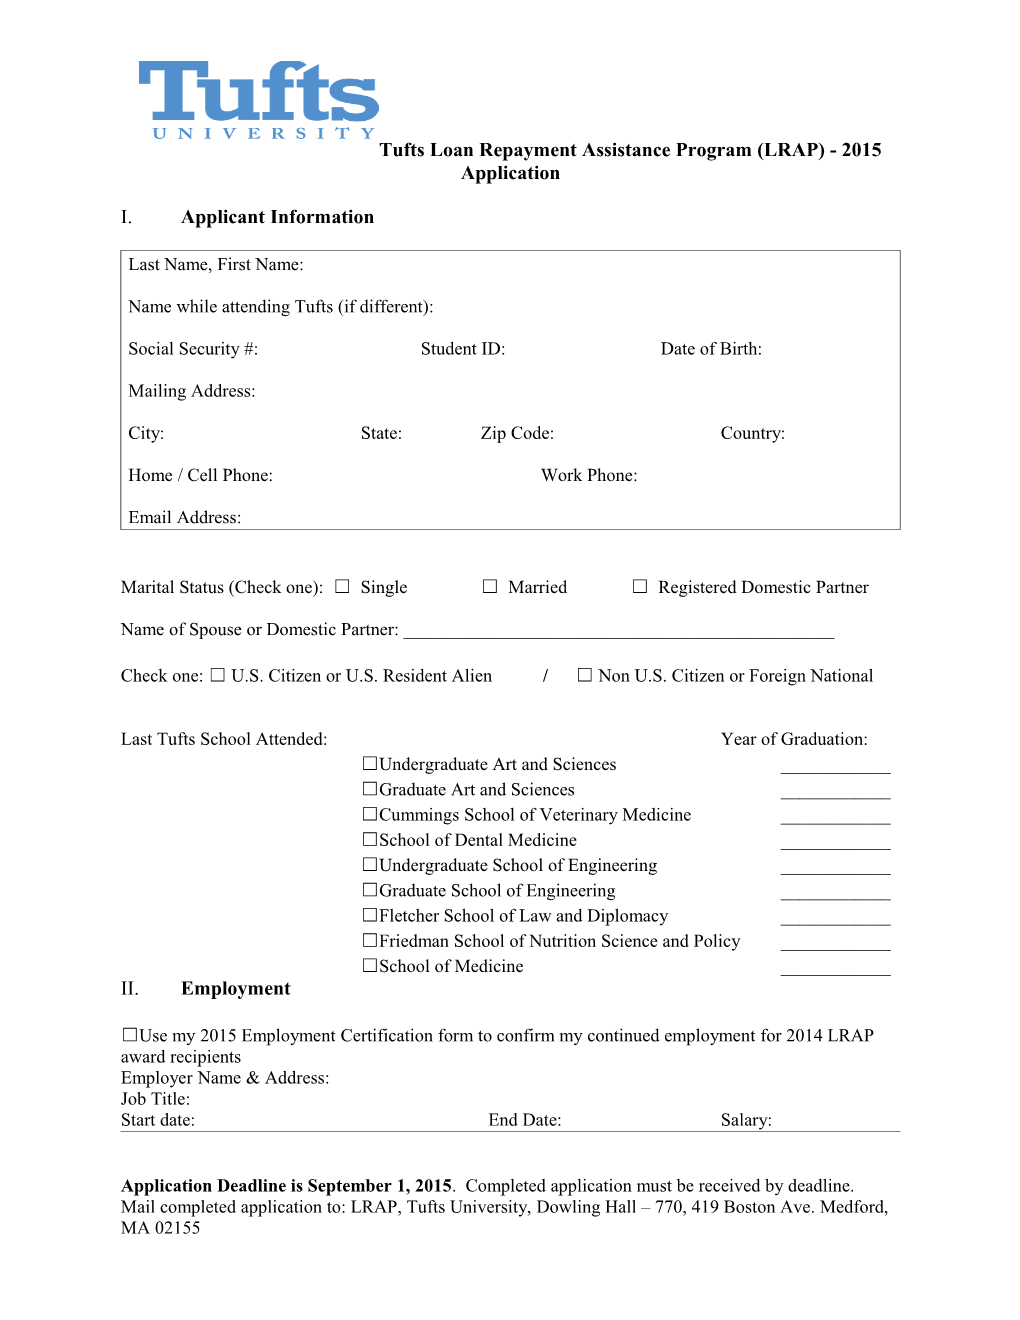 Tufts Loan Repayment Assistance Program (LRAP) - 2015 Application